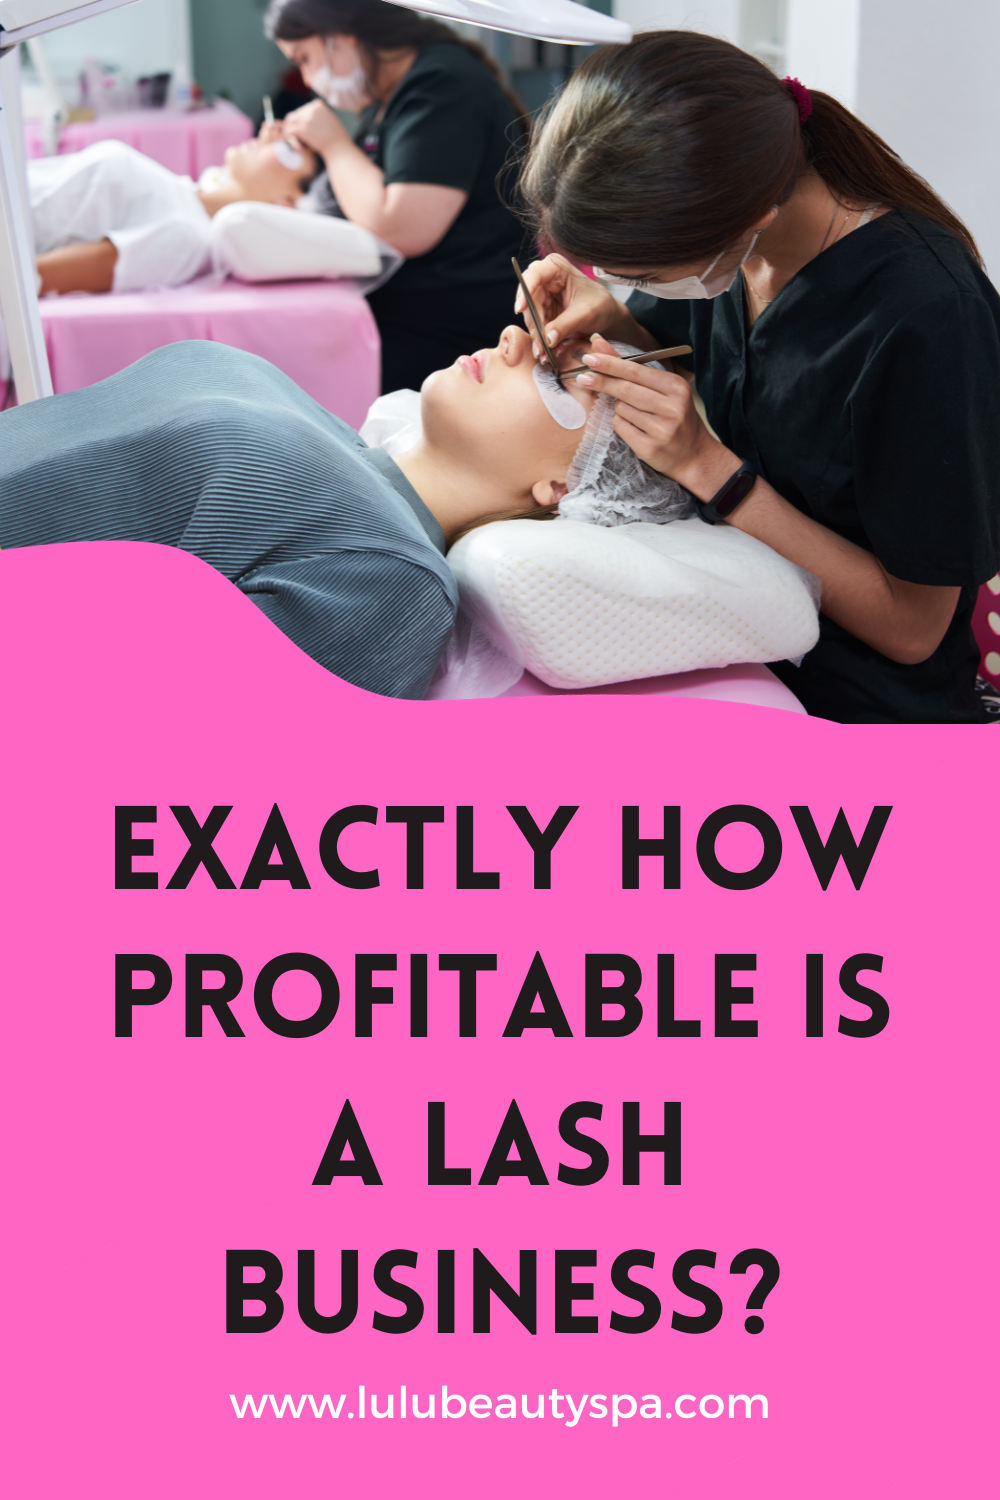 How Profitable is a Lash Business